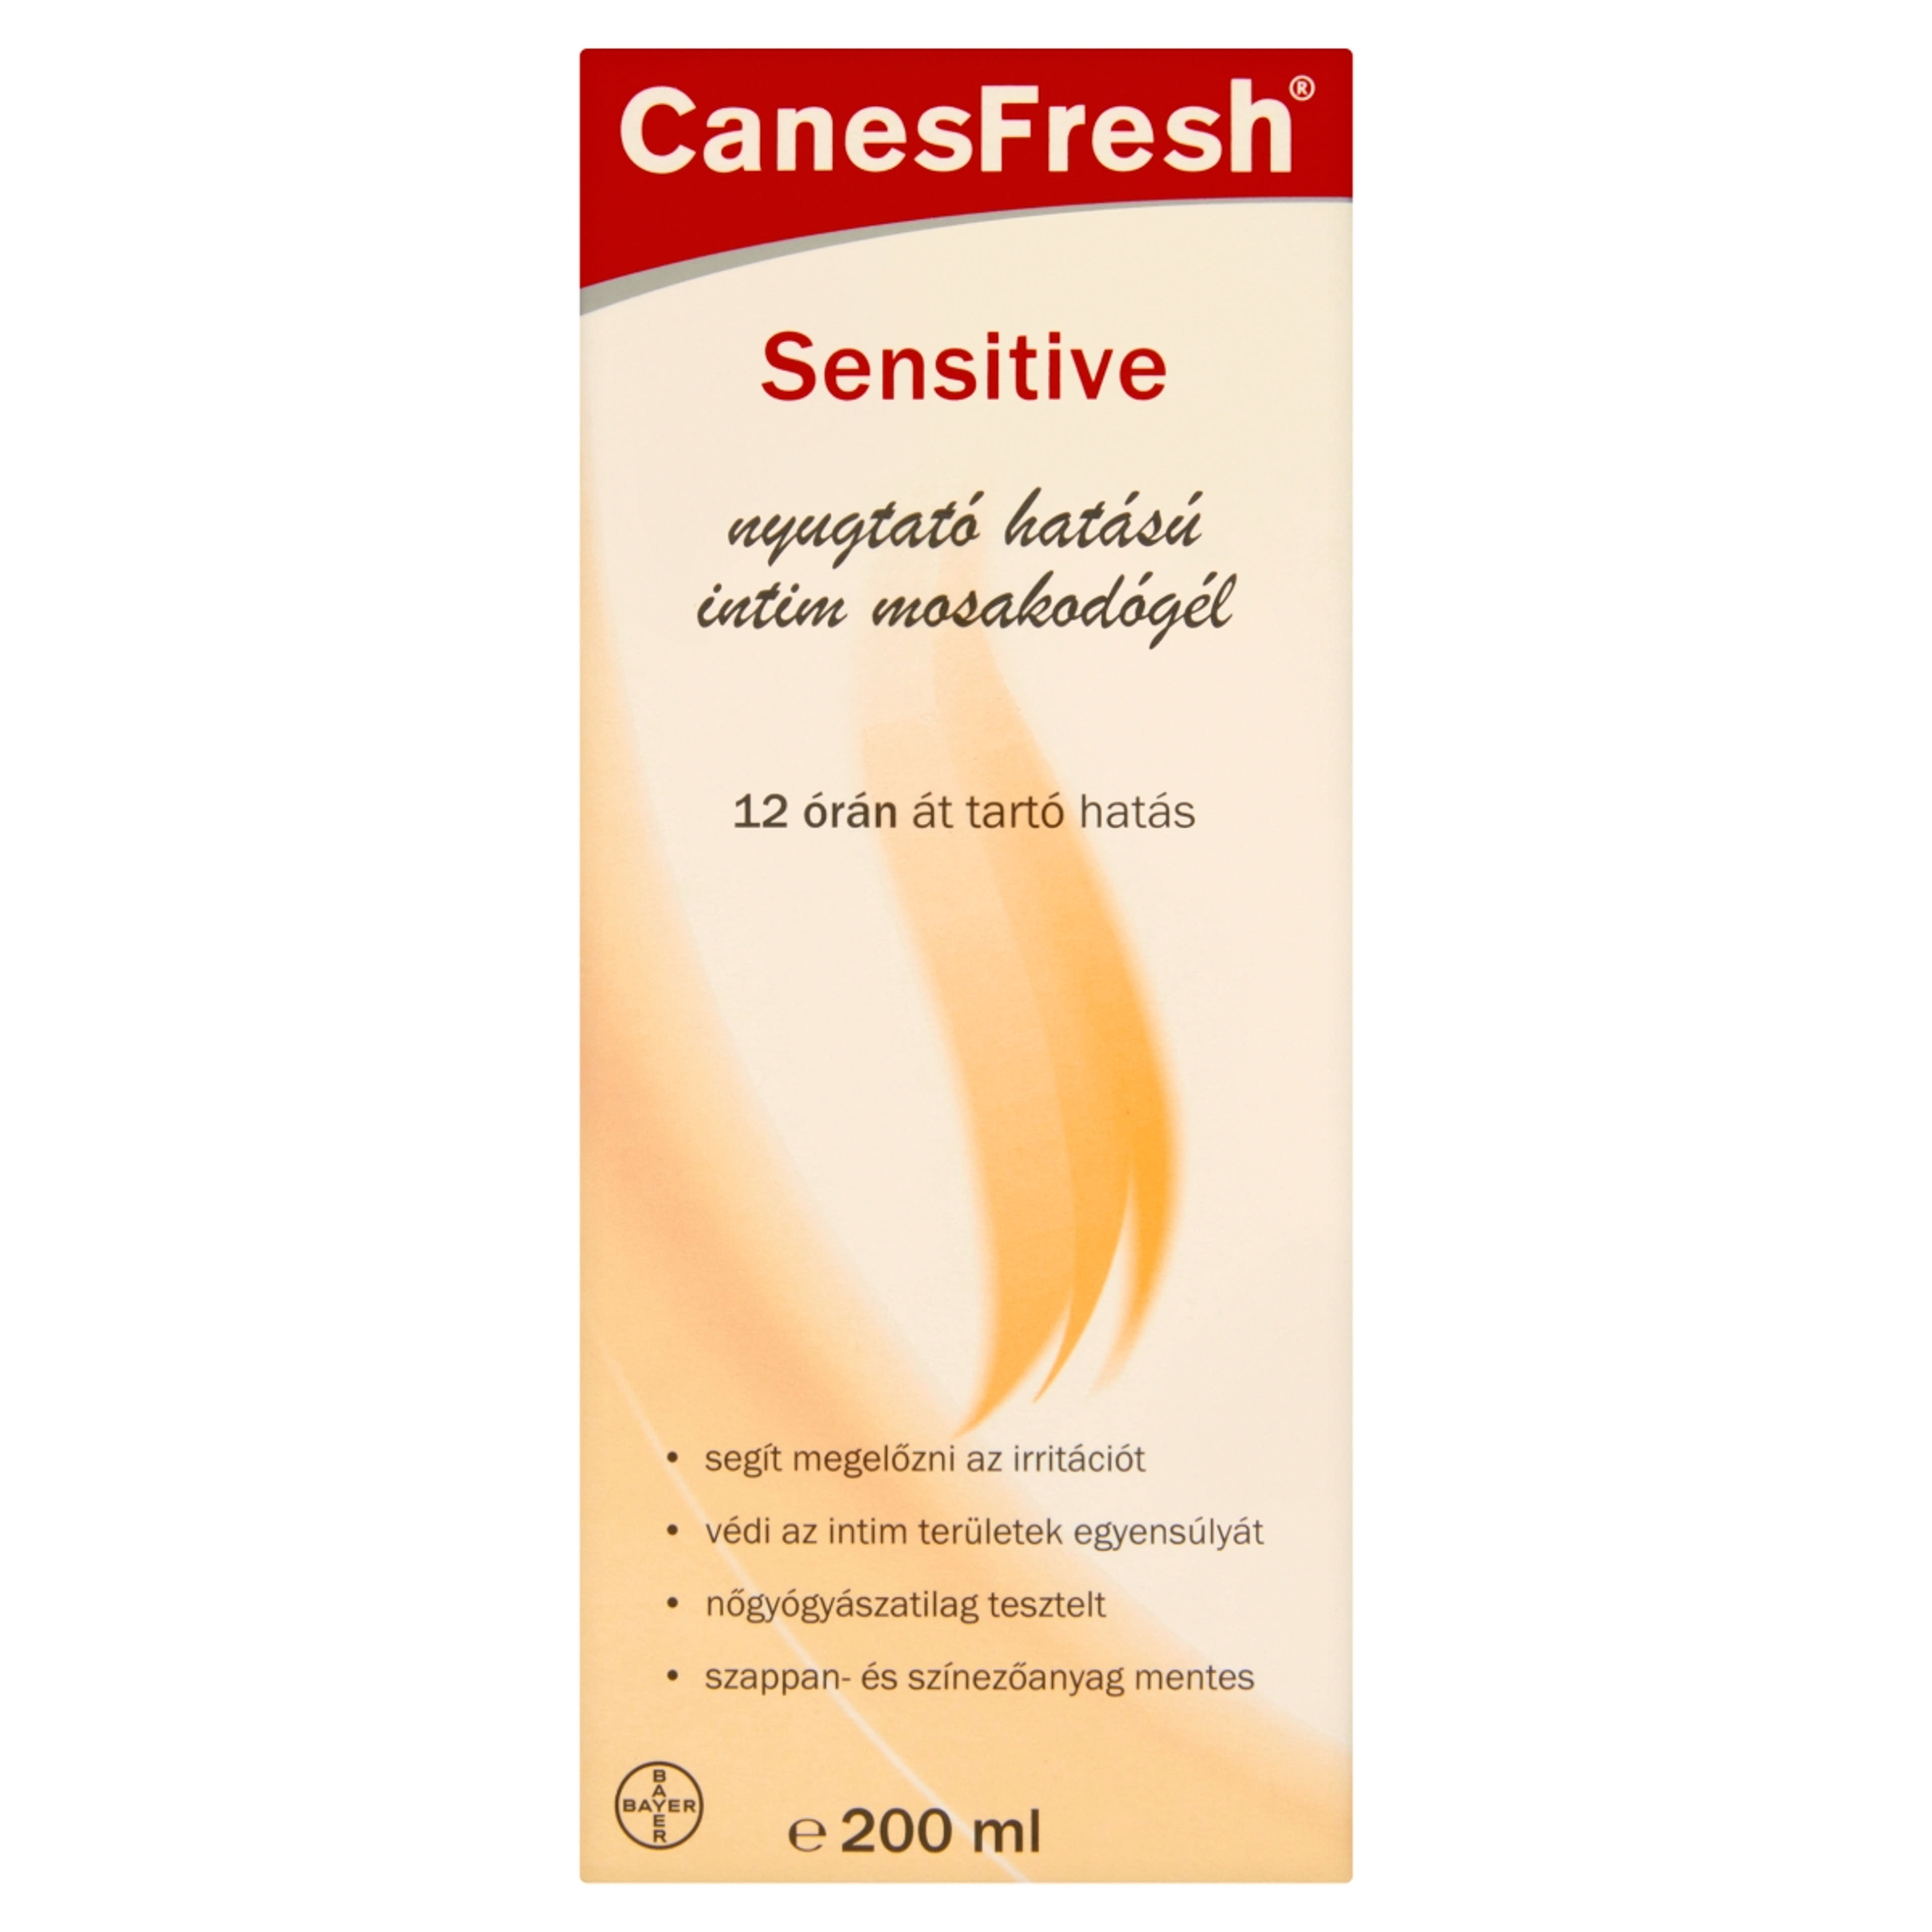 CanesFresh Sensitive intim mosakodógél - 200 ml